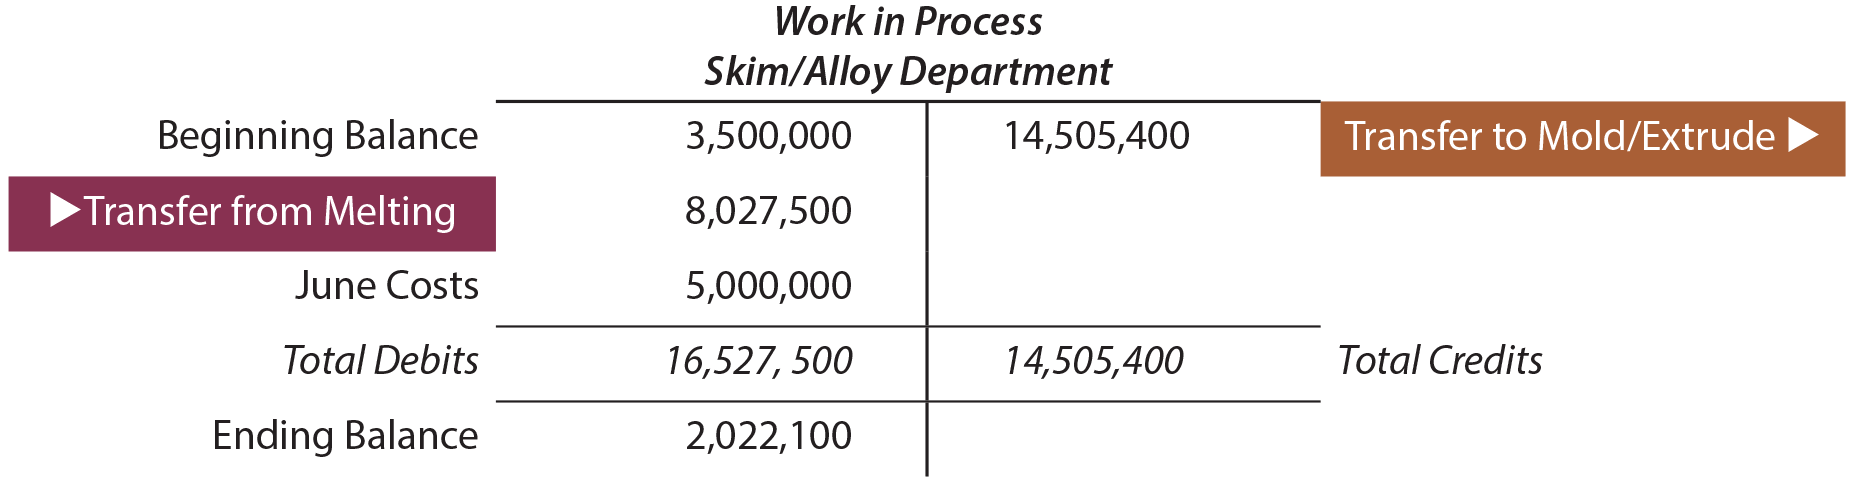 Work in Process Skim Department T Account